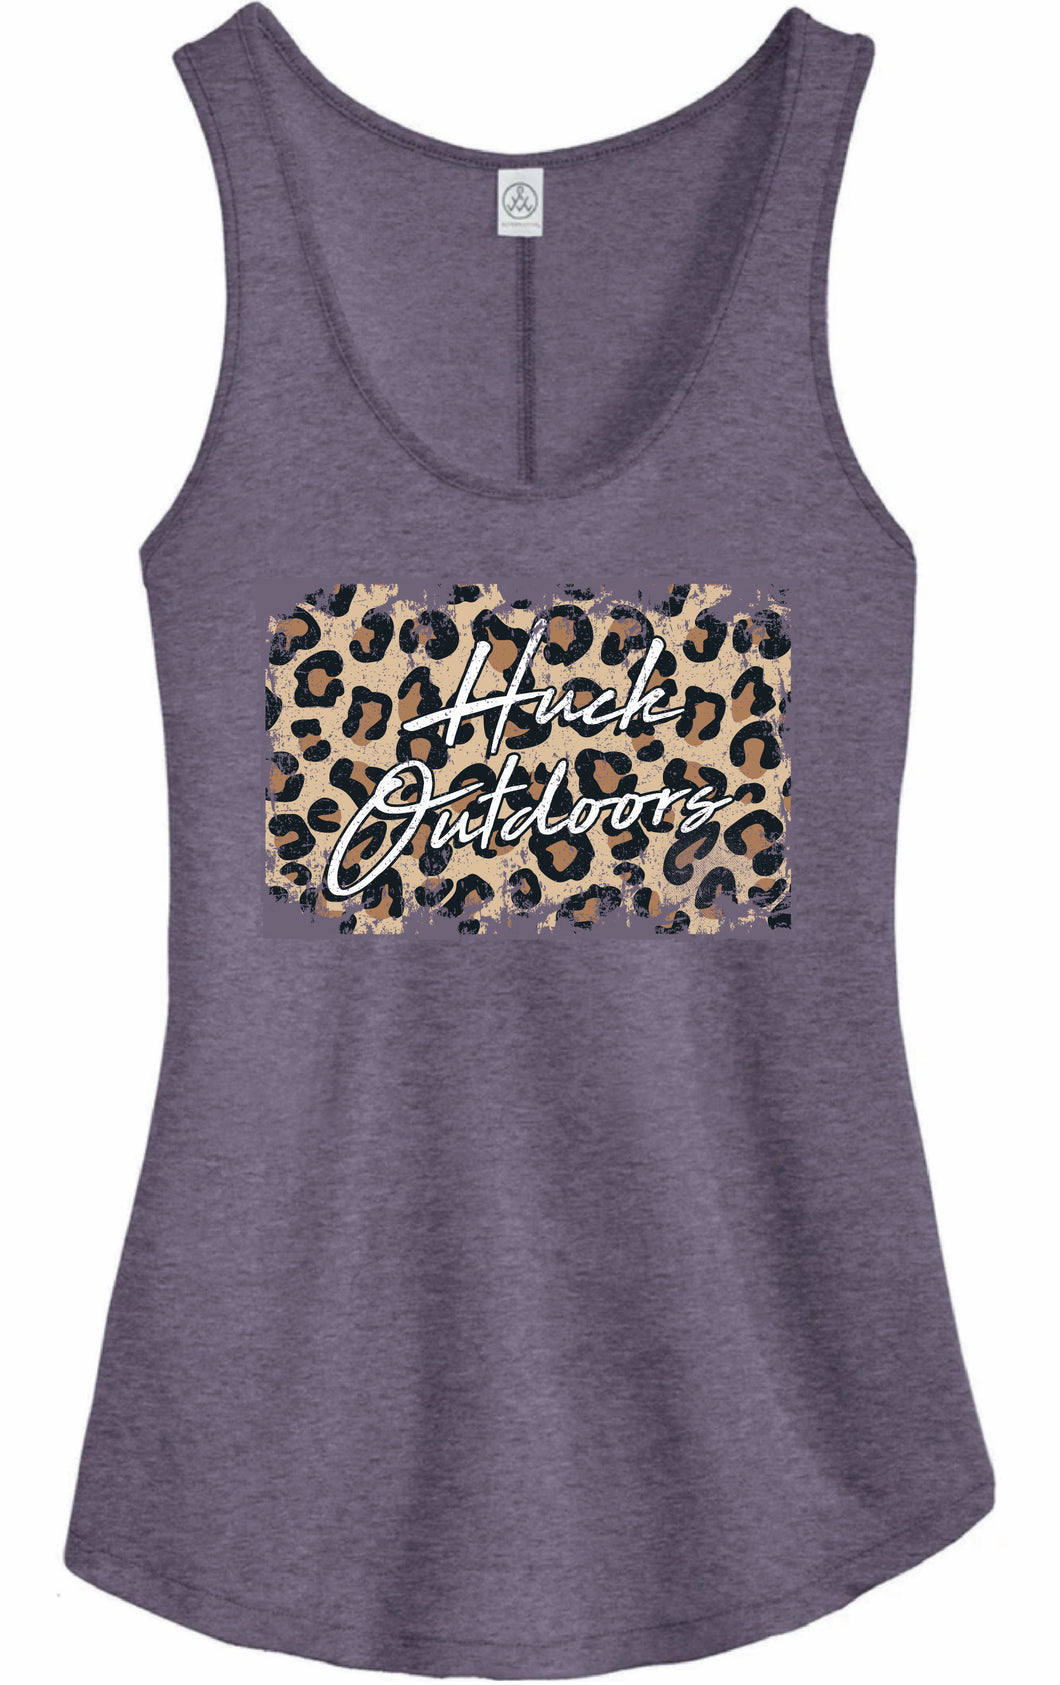 Backstage Cheetah Print Tank Top